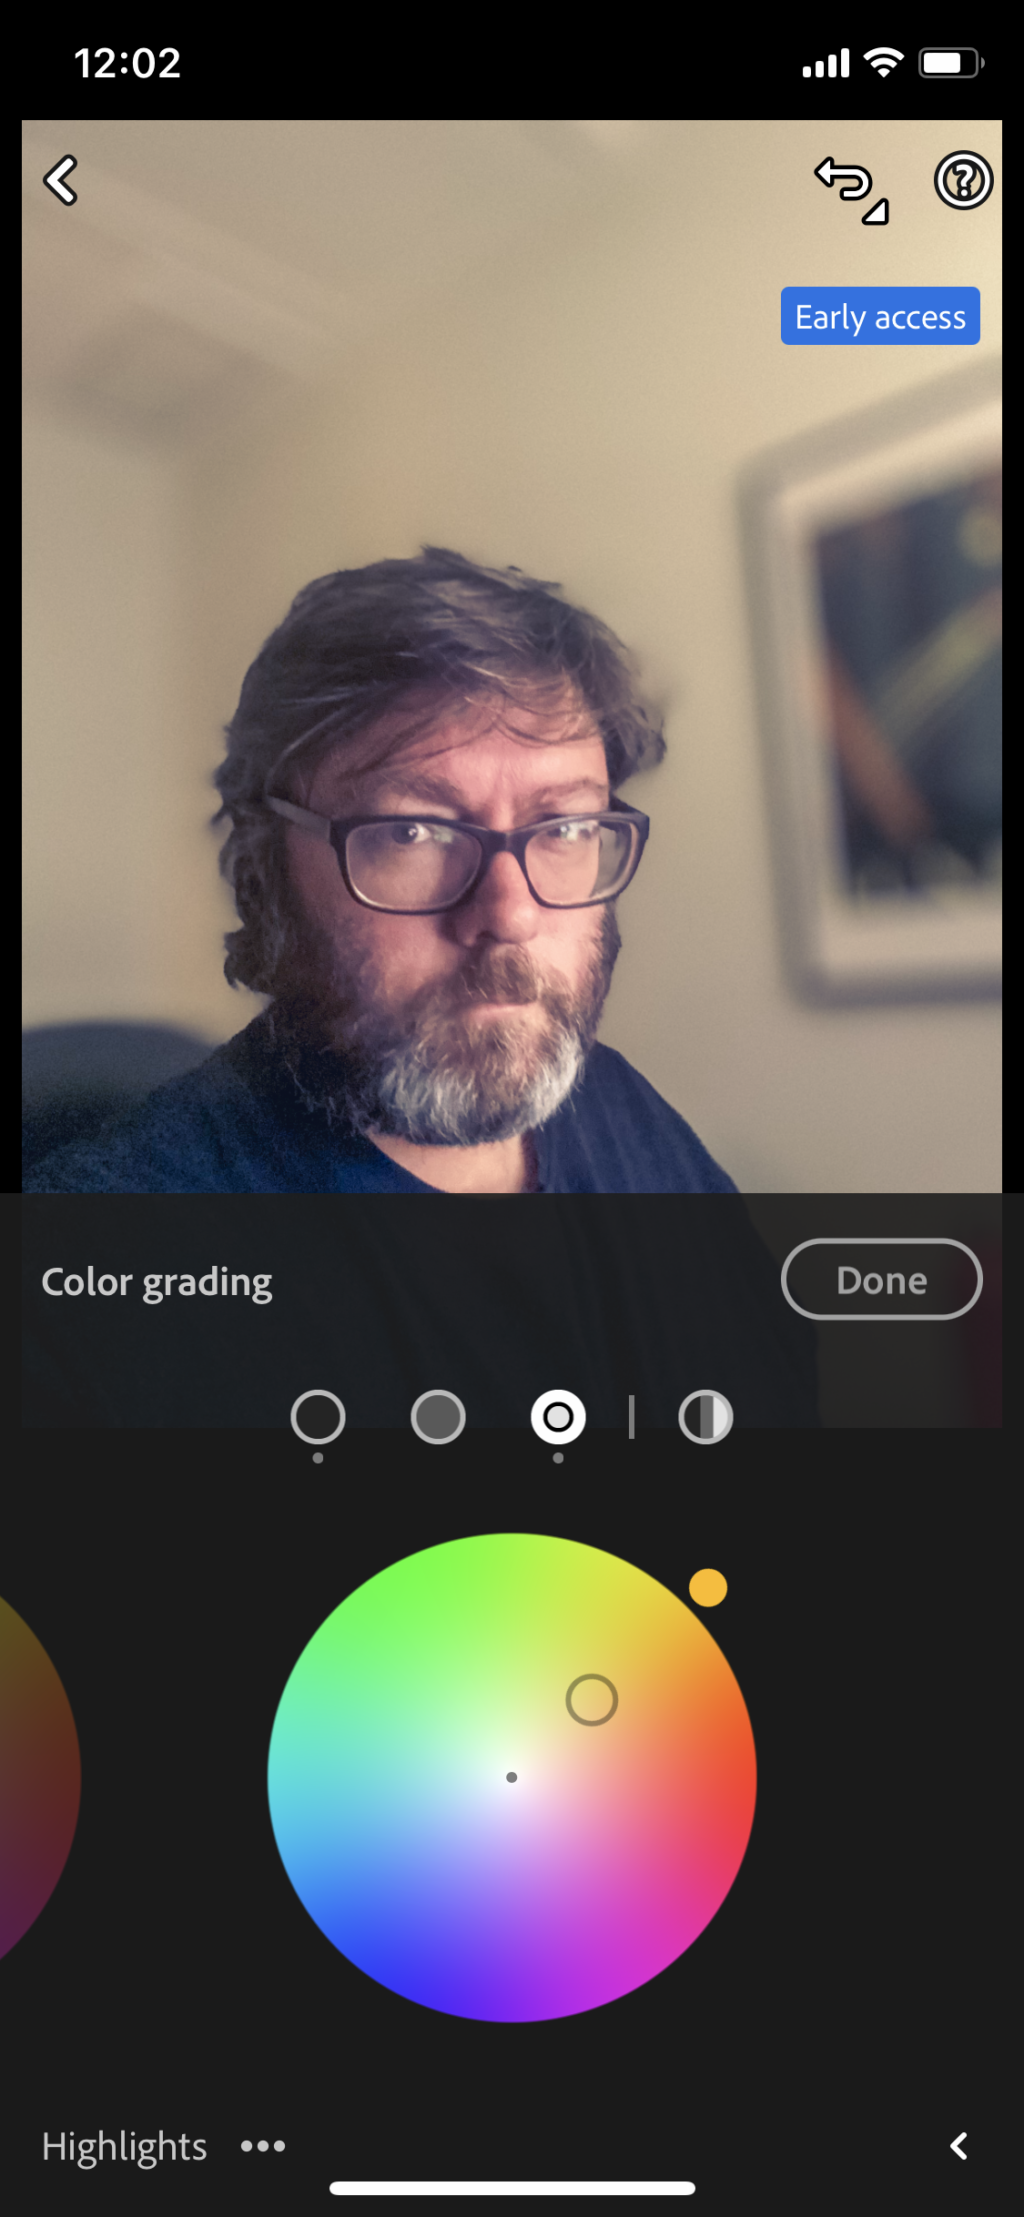 color grading a selfie - highlights